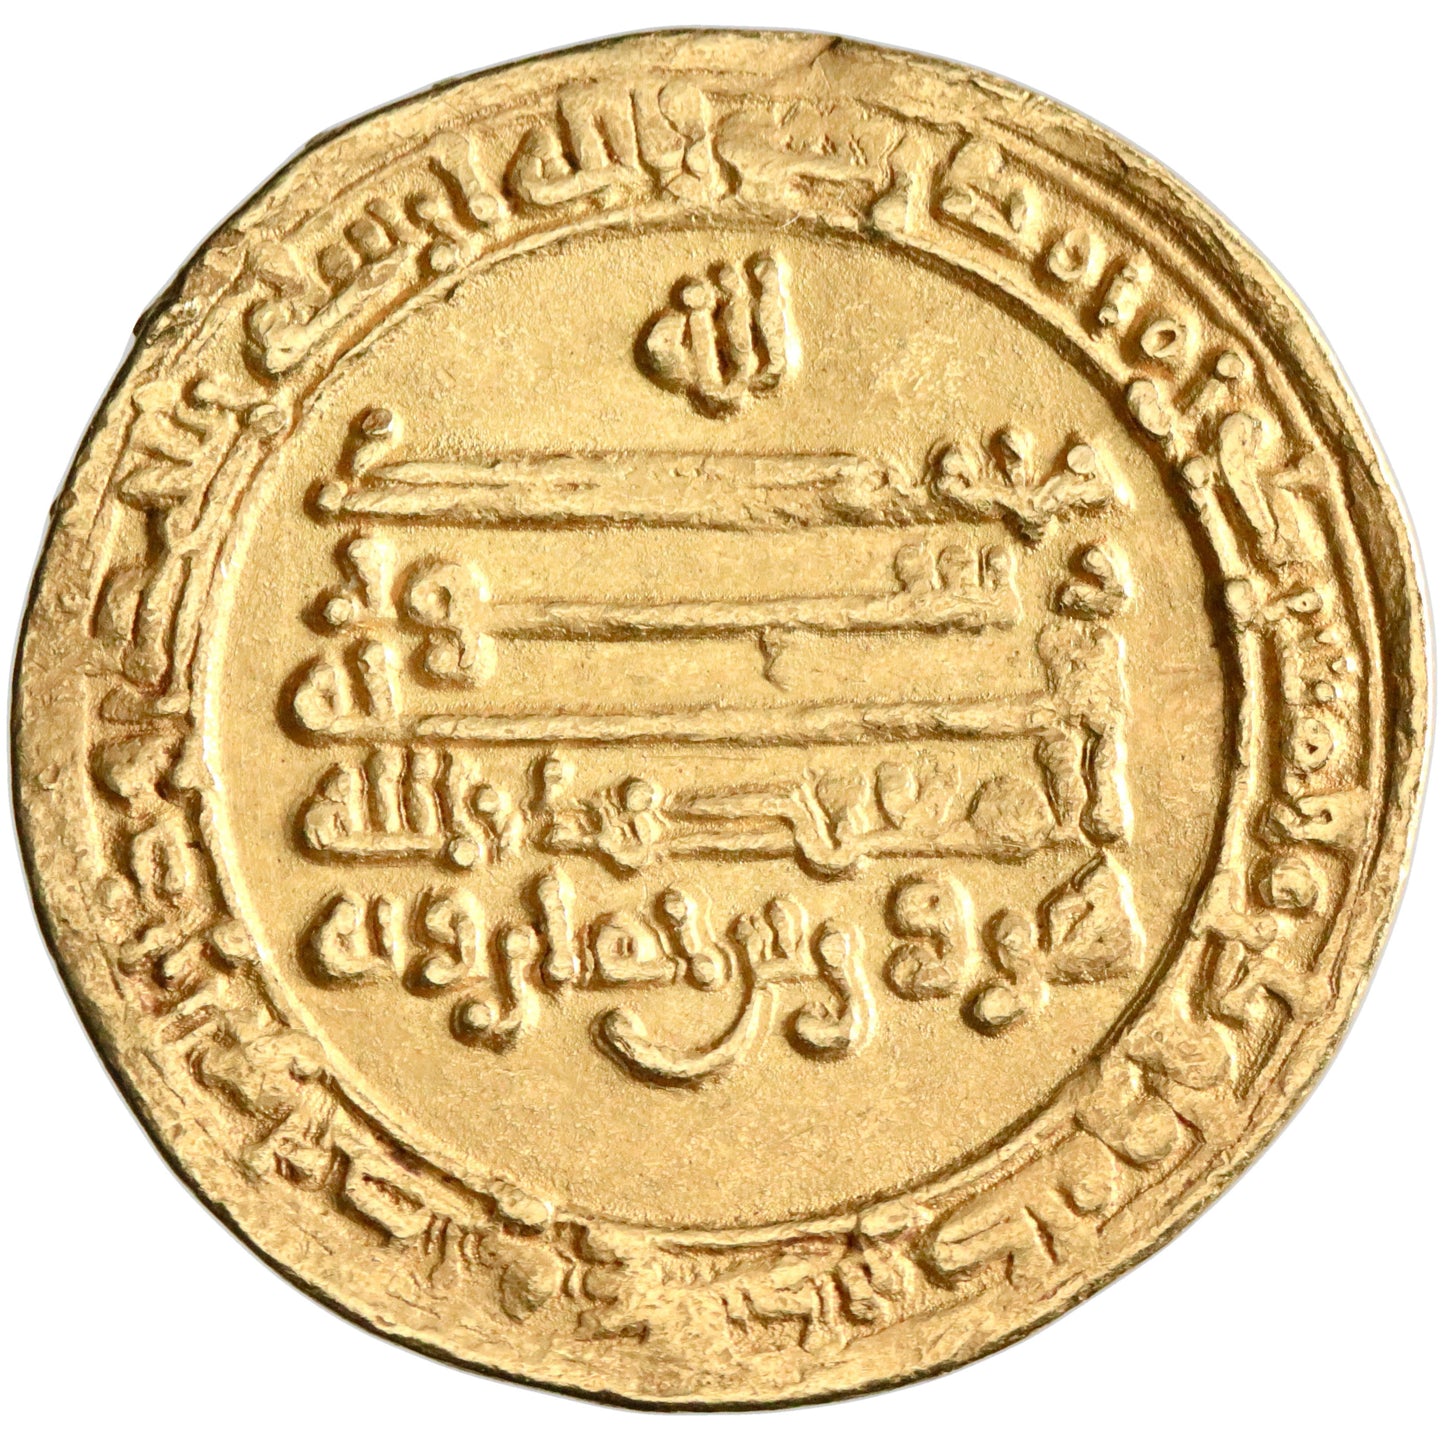 Tulunid, Harun ibn Khumarawayh, gold dinar, Misr (Egypt) mint, AH 284, citing al-Mu'tadid